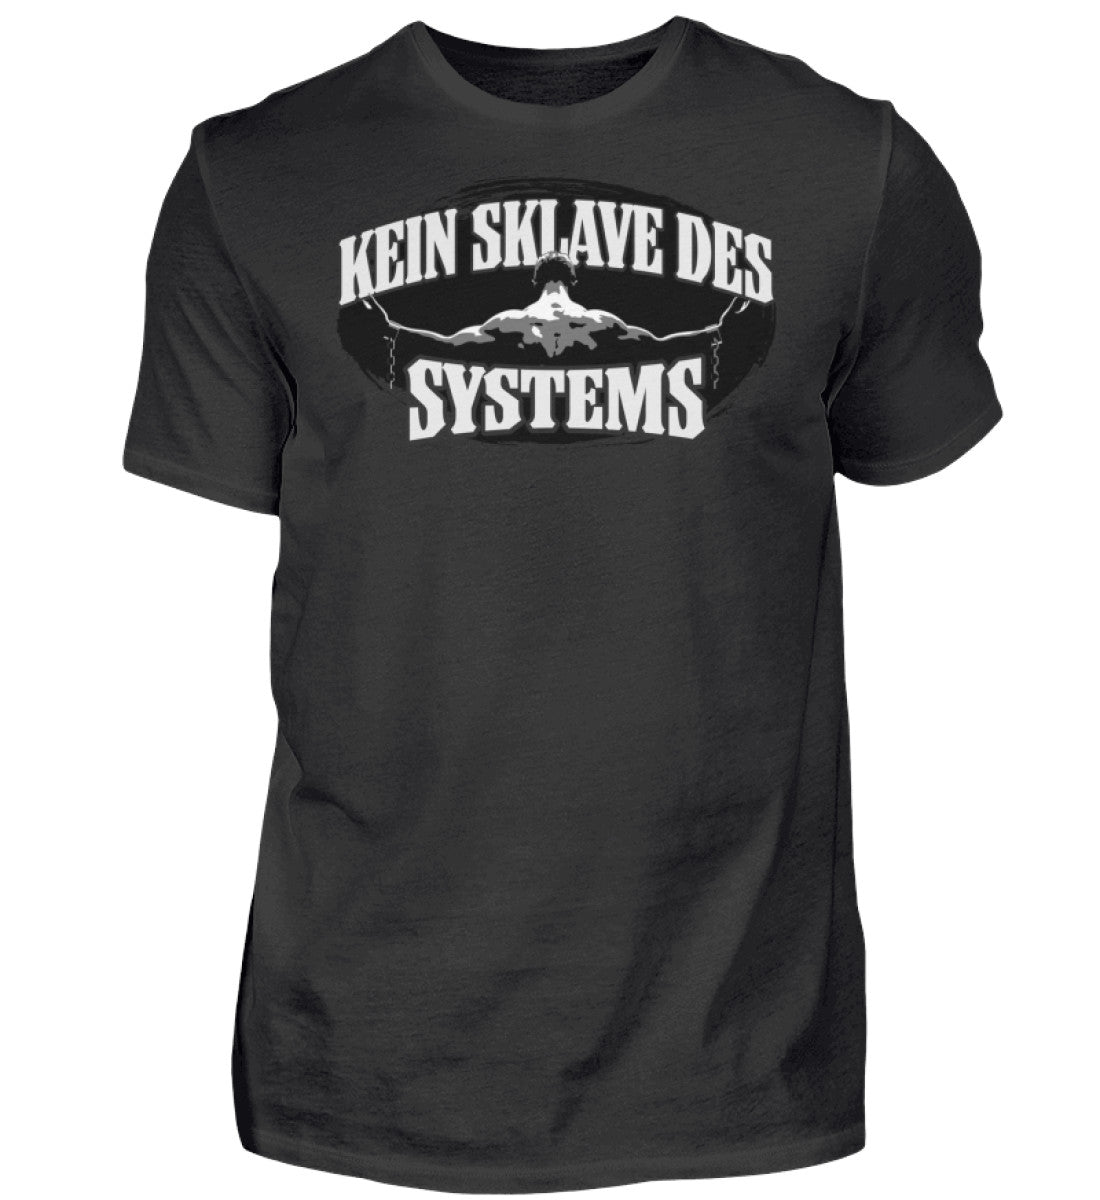 Kein Sklave des Sytems T-Shirt www.geruestbauershop.de